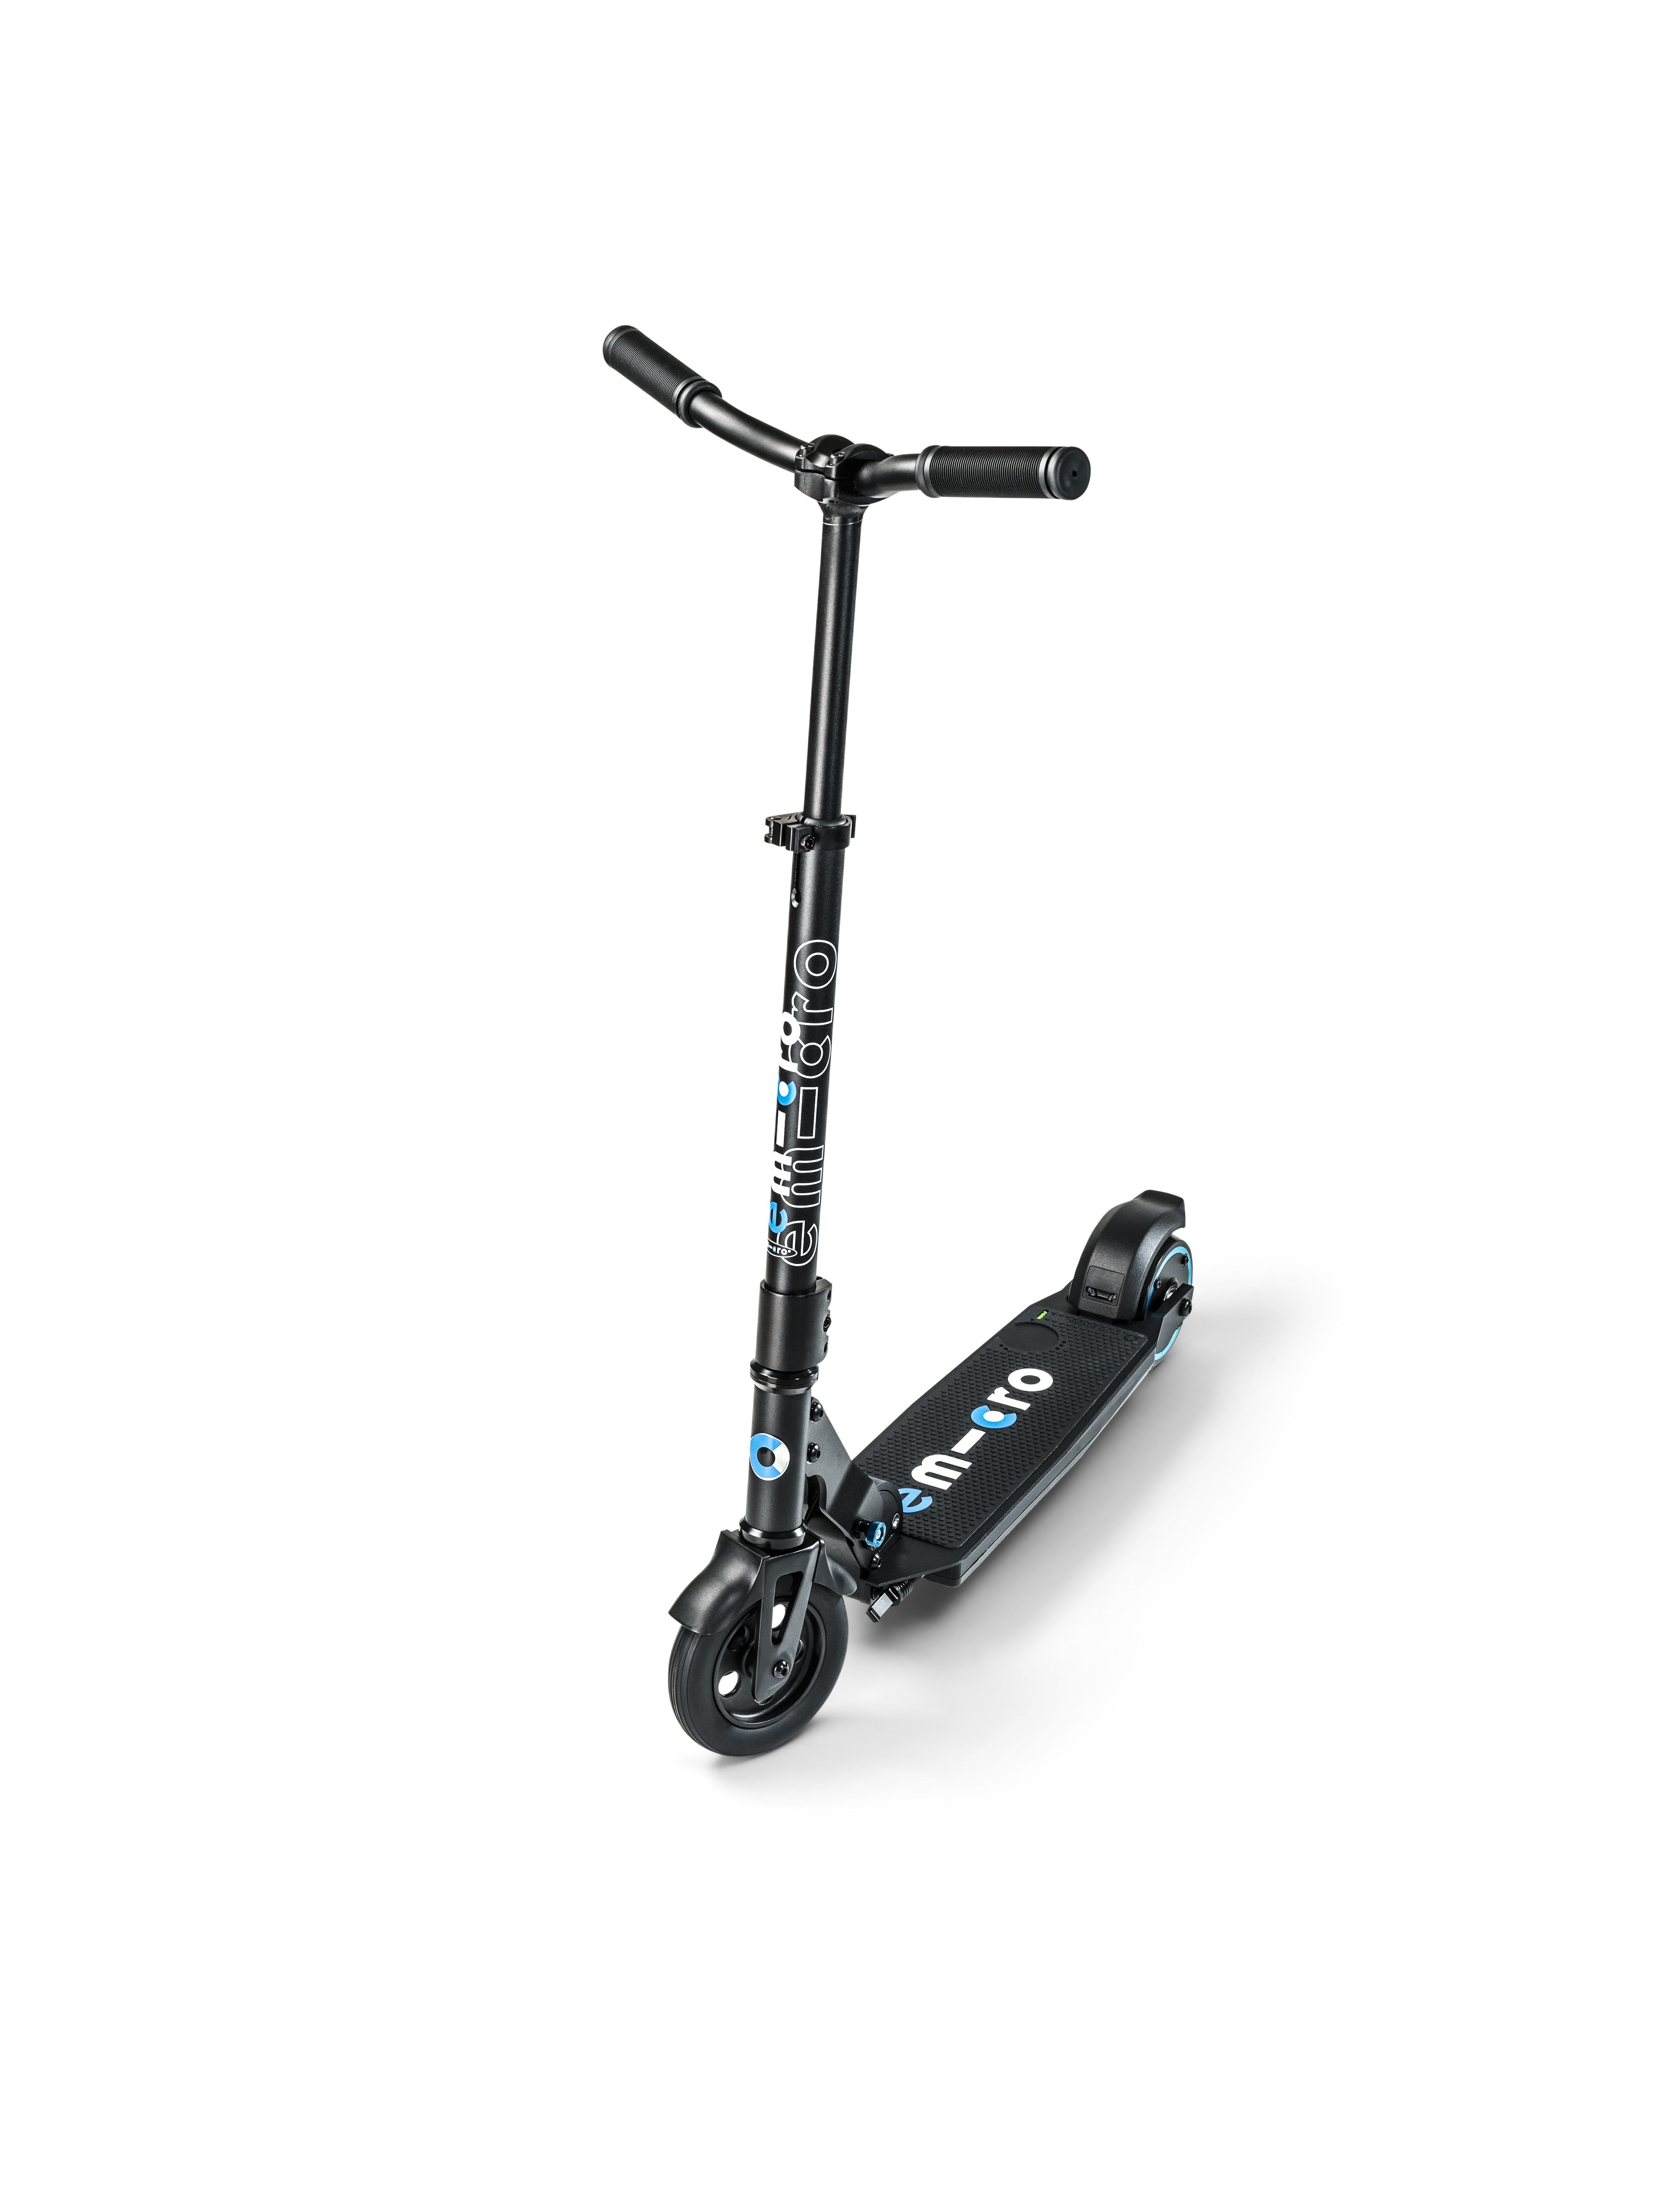 motorized two wheel scooter